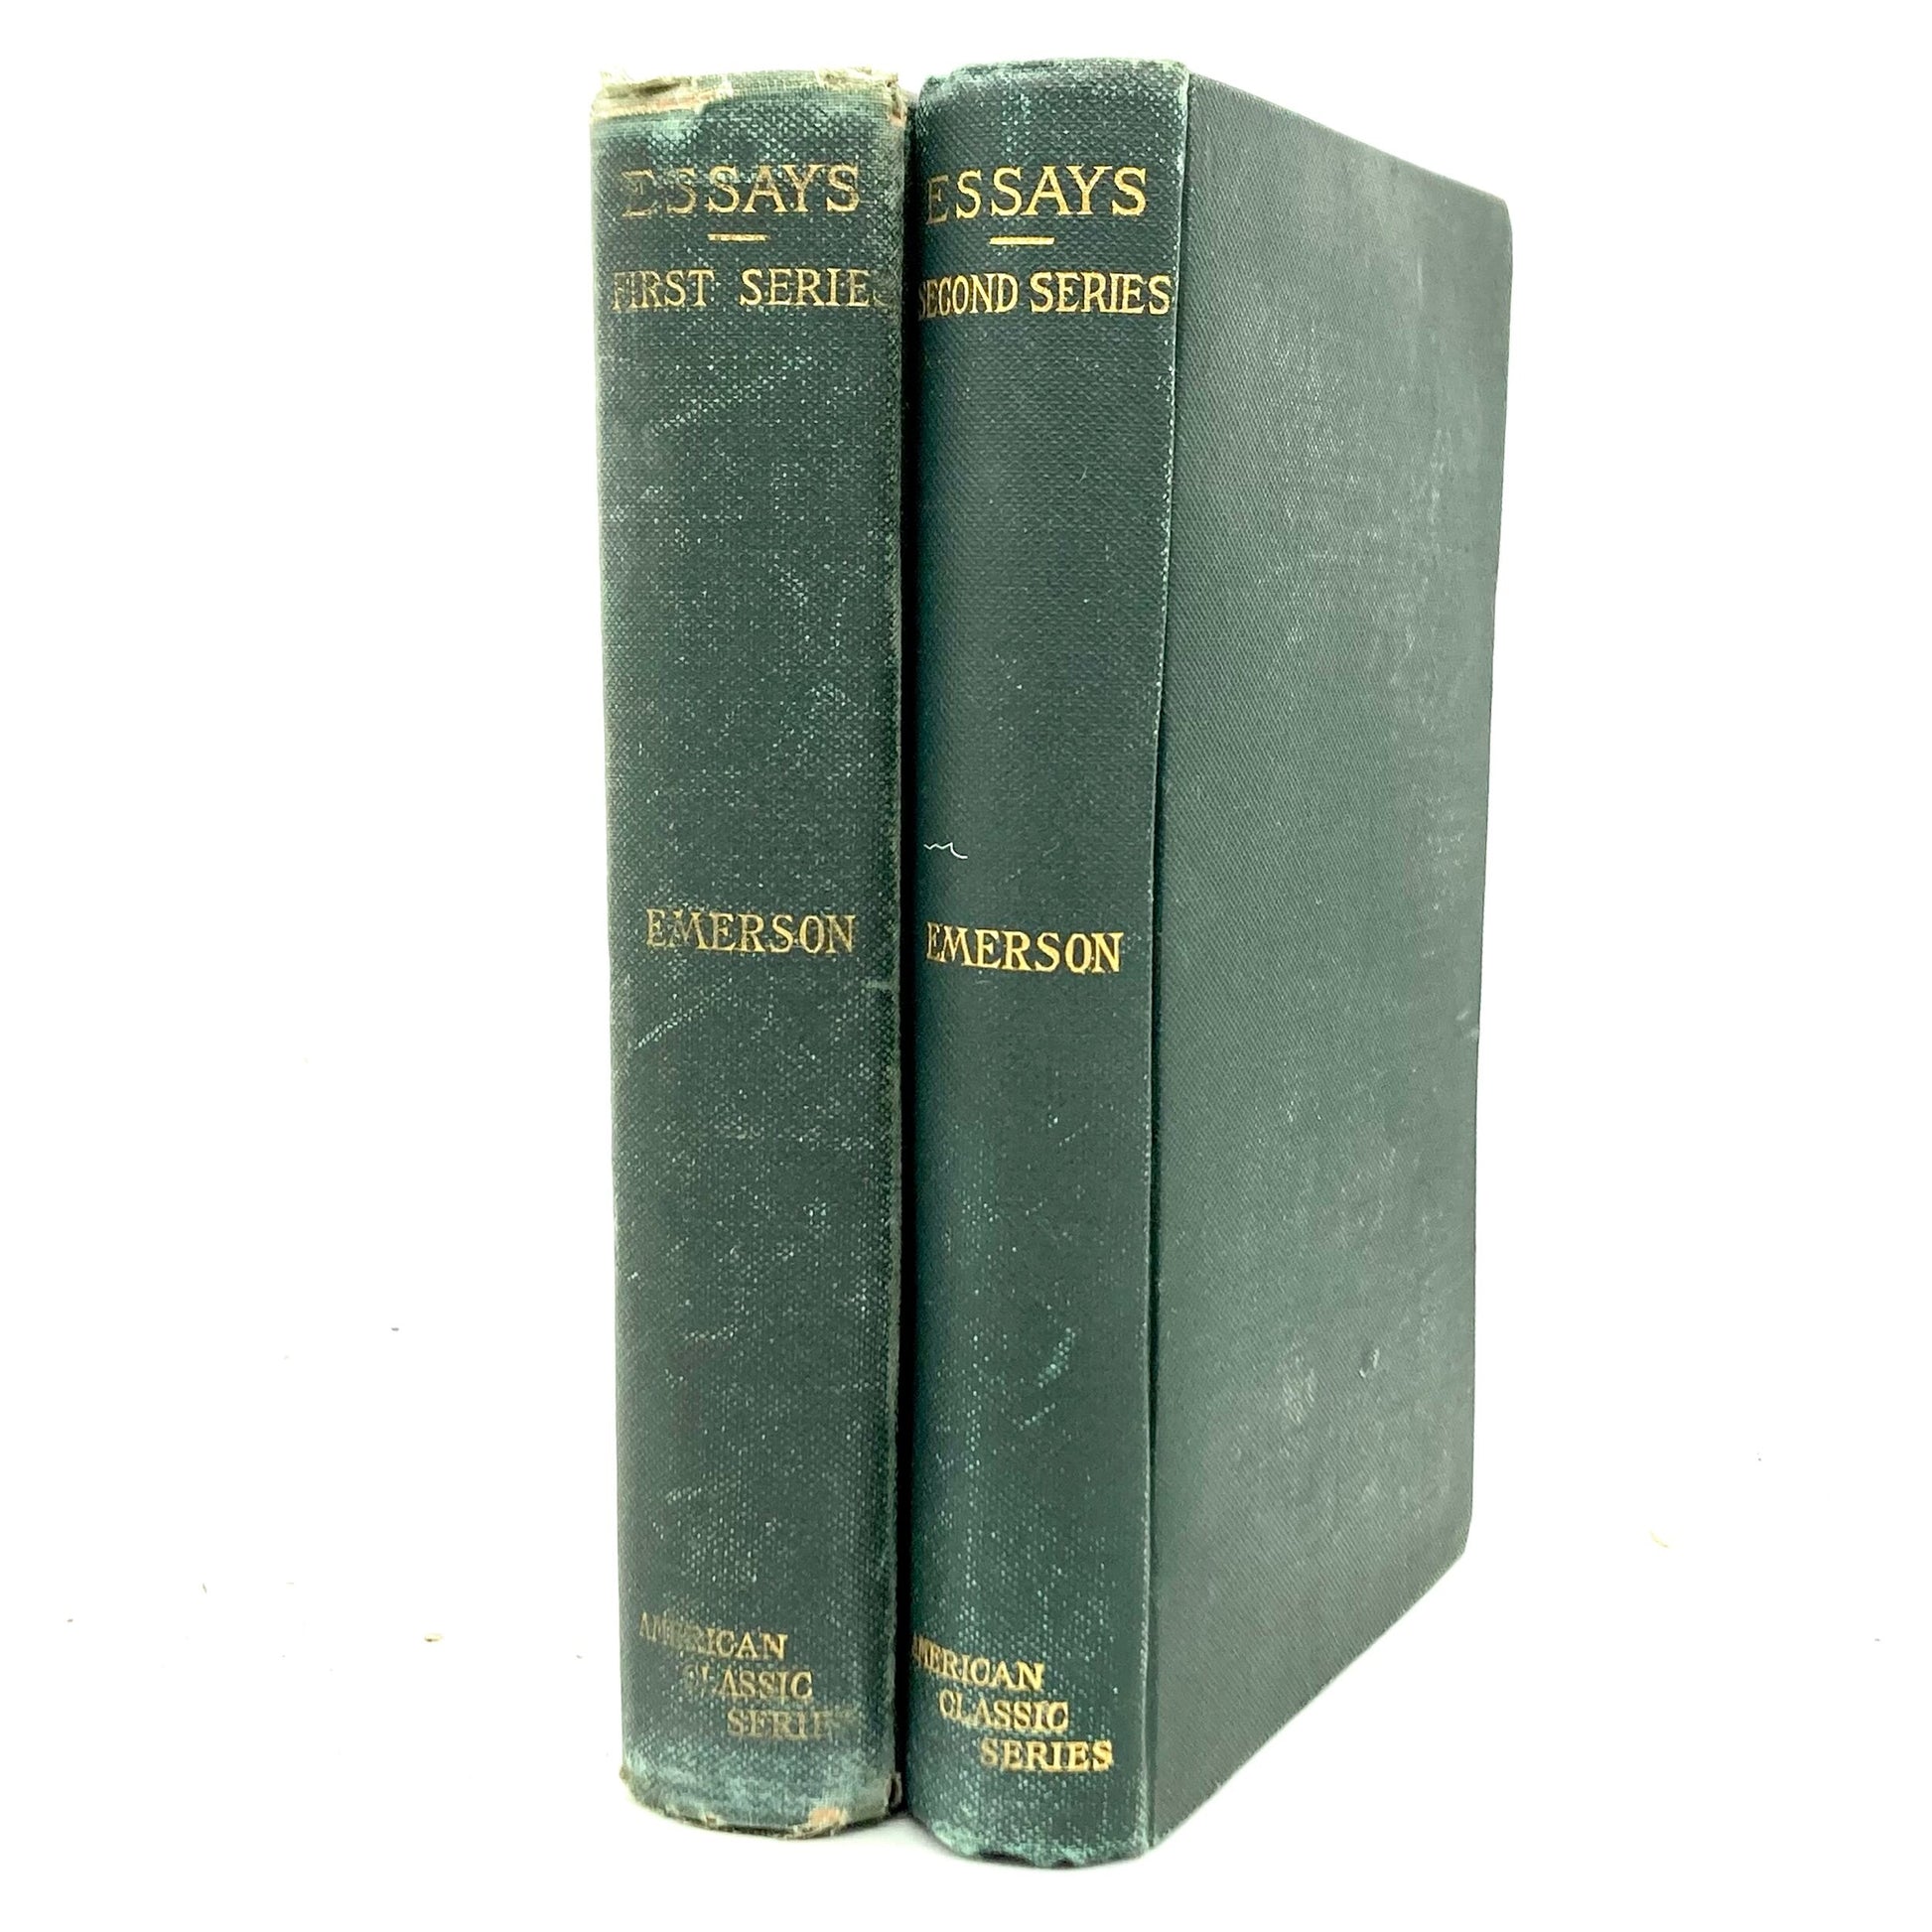 EMERSON, Ralph Waldo "Essays" [David McKay, 1893] - 2 Volumes - Buzz Bookstore